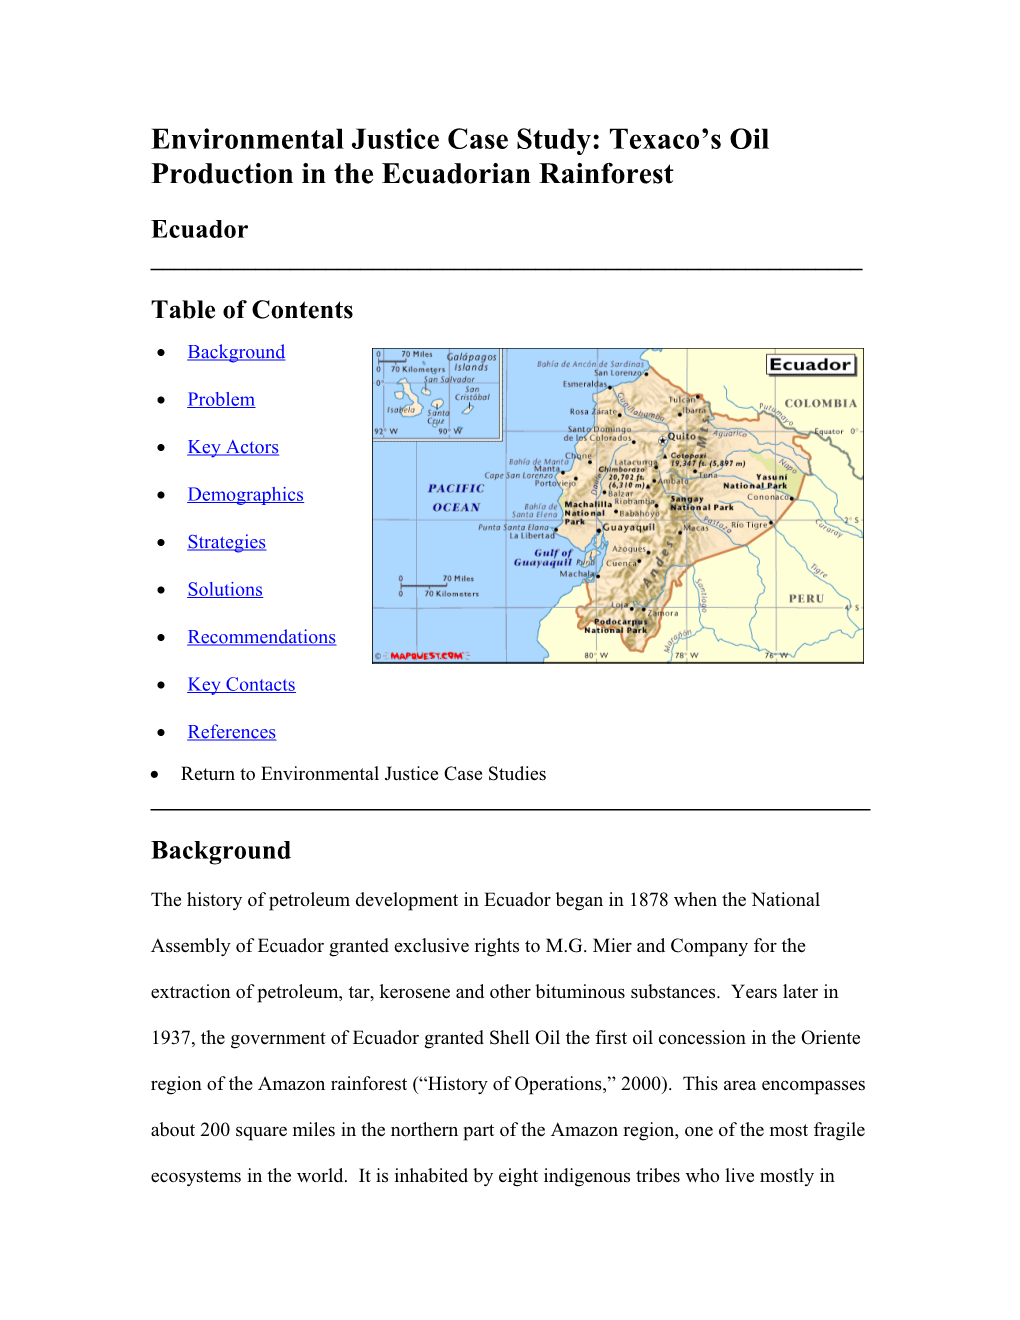 Environmental Justice Case Study: Activities of Texaco in the Ecuadorian Rainforest